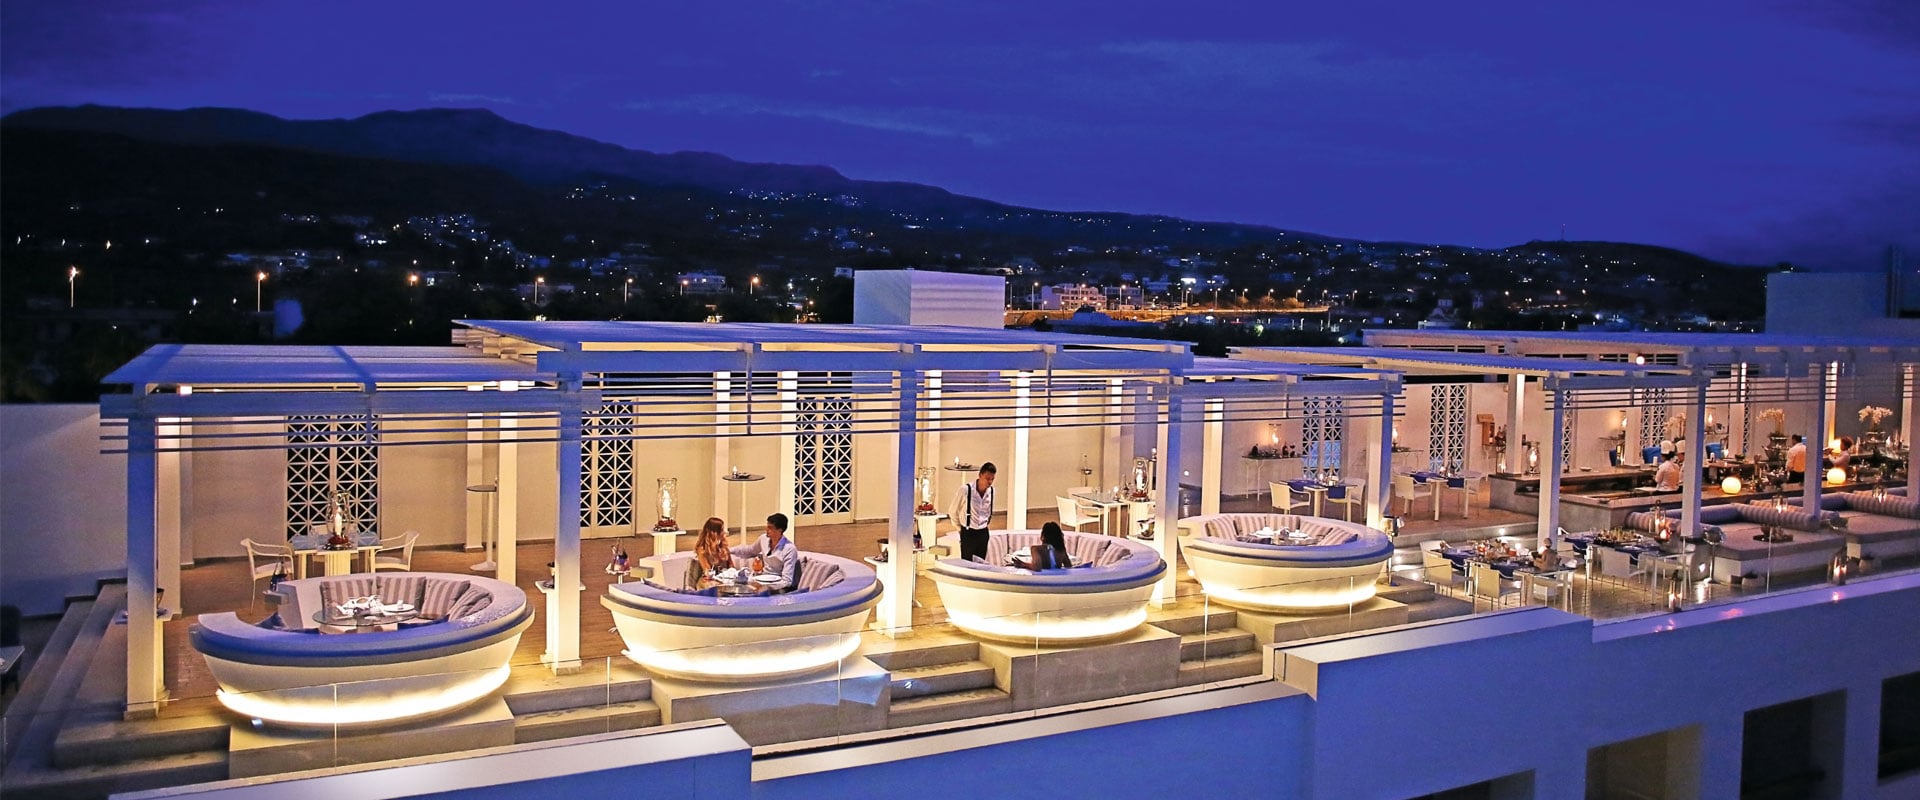 rethymno creta palace Hotel Greece 3